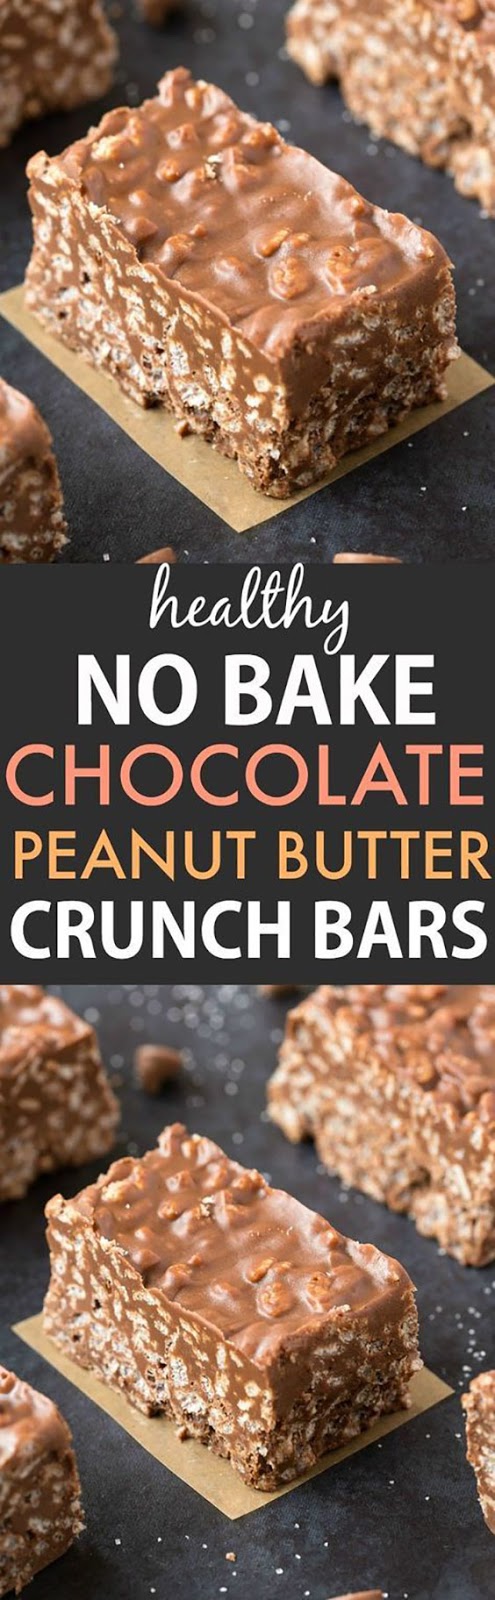 Healthy No Bake Chocolate Peanut Butter Crunch Bars